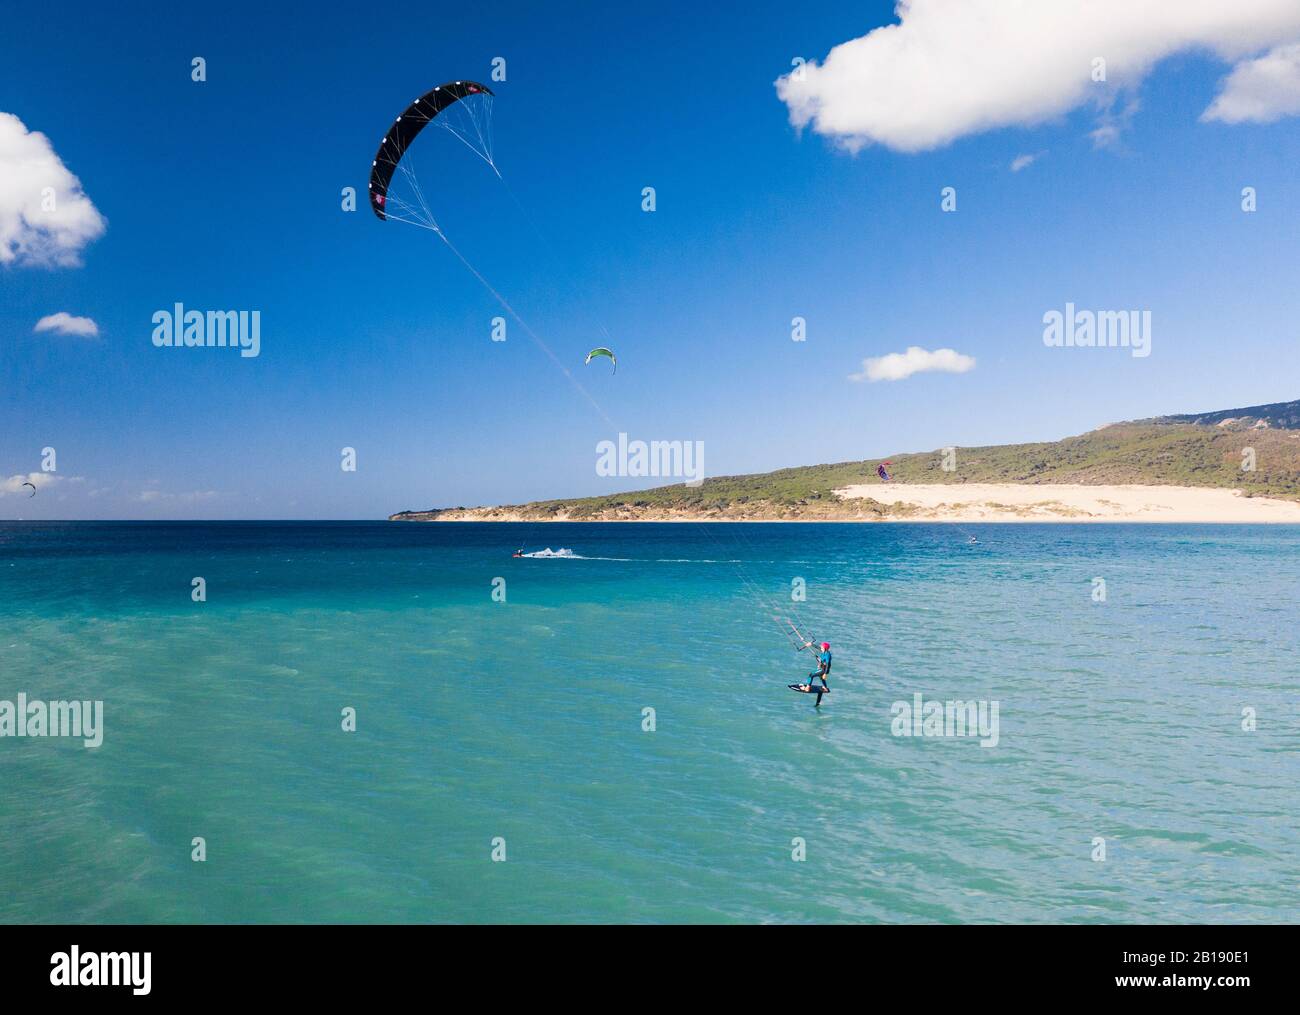 Woman riding a kite foil at Valdevaqueros, Tarifa, Costa de la Luz, Cadiz, Andalusia, Spain. Stock Photo